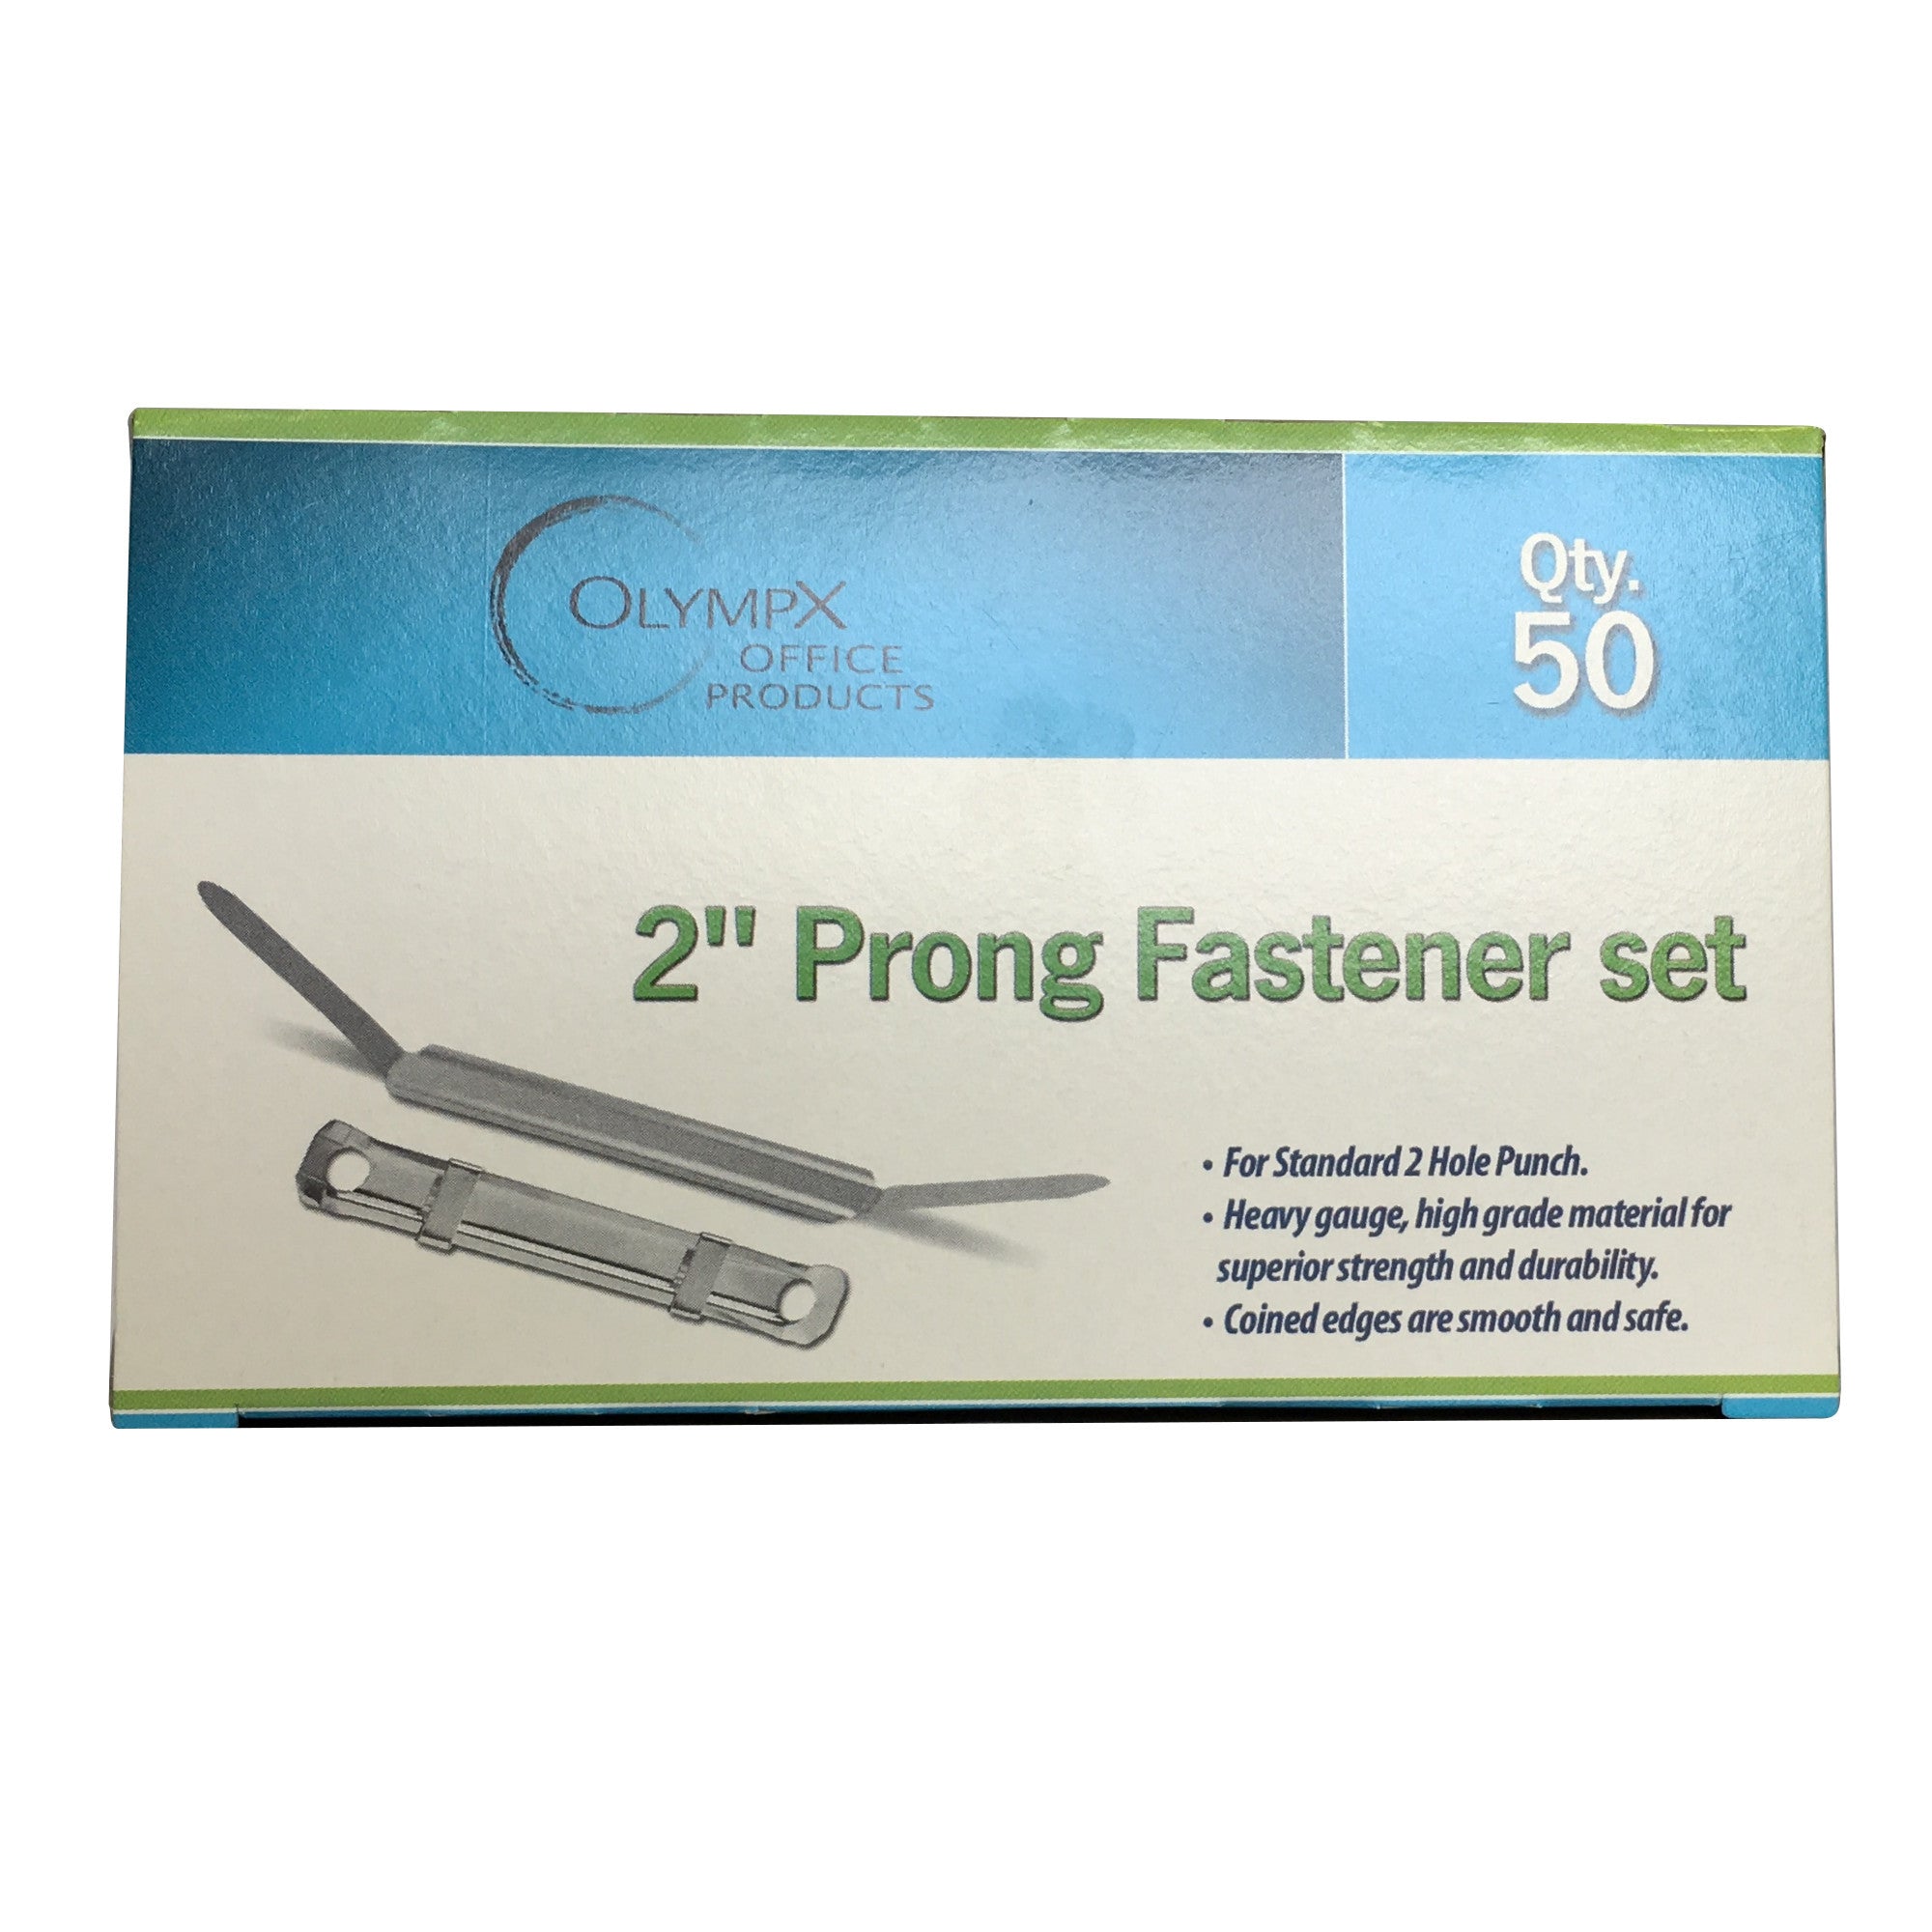 Prong fastener #Quantity_50